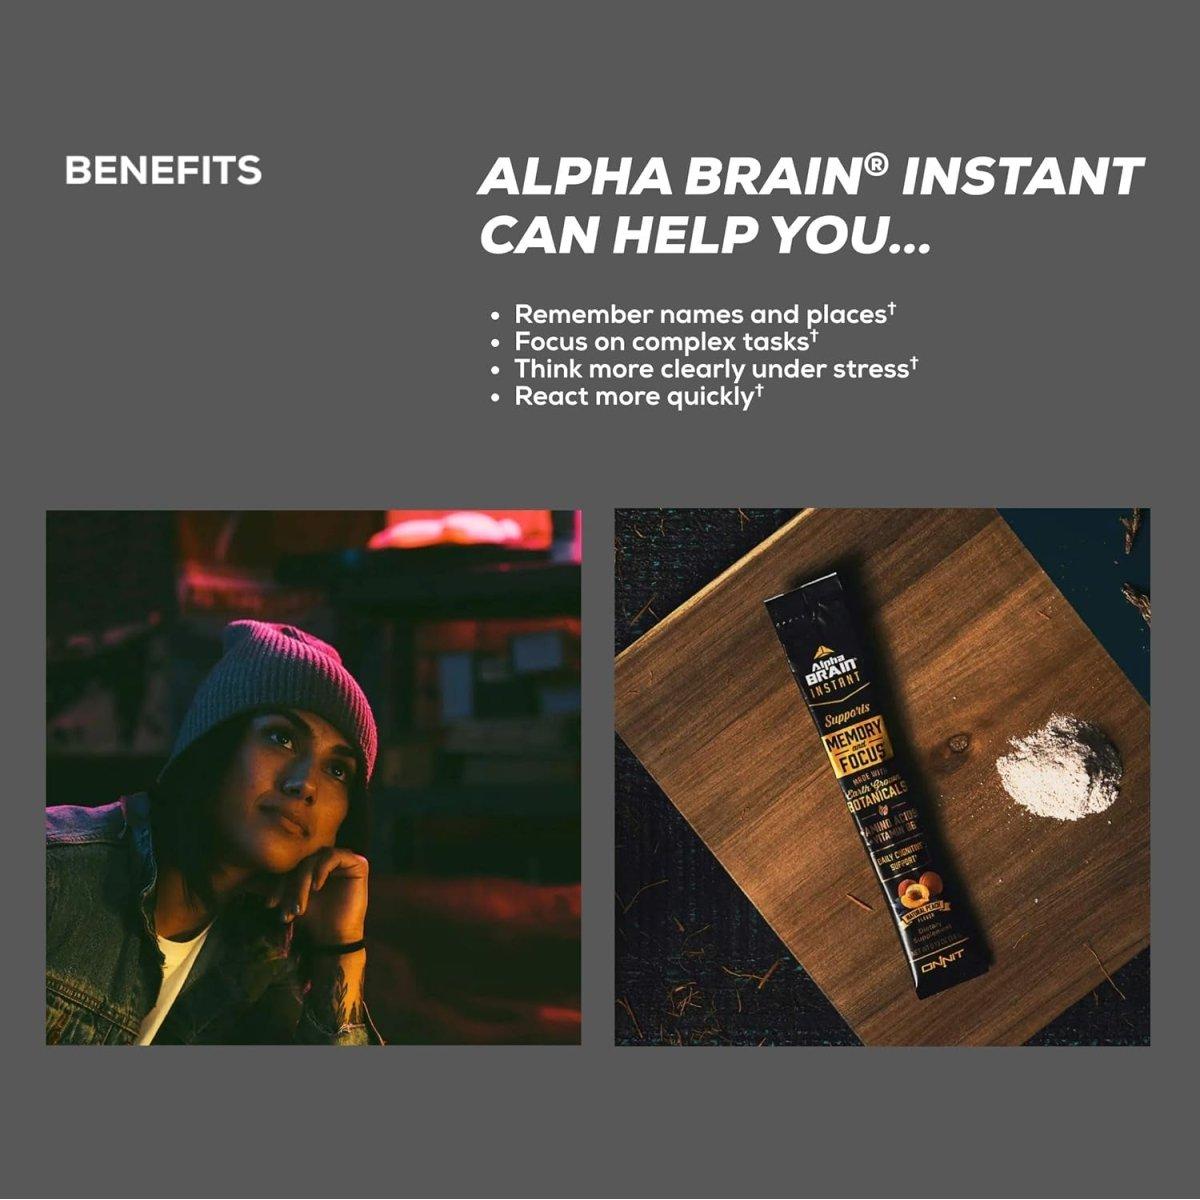 ONNIT Alpha Brain Premium Nootropic Brain Supplement, 30 Count, for Men &  Women - Caffeine-Free Focus Capsules for Concentration, Brain Booster